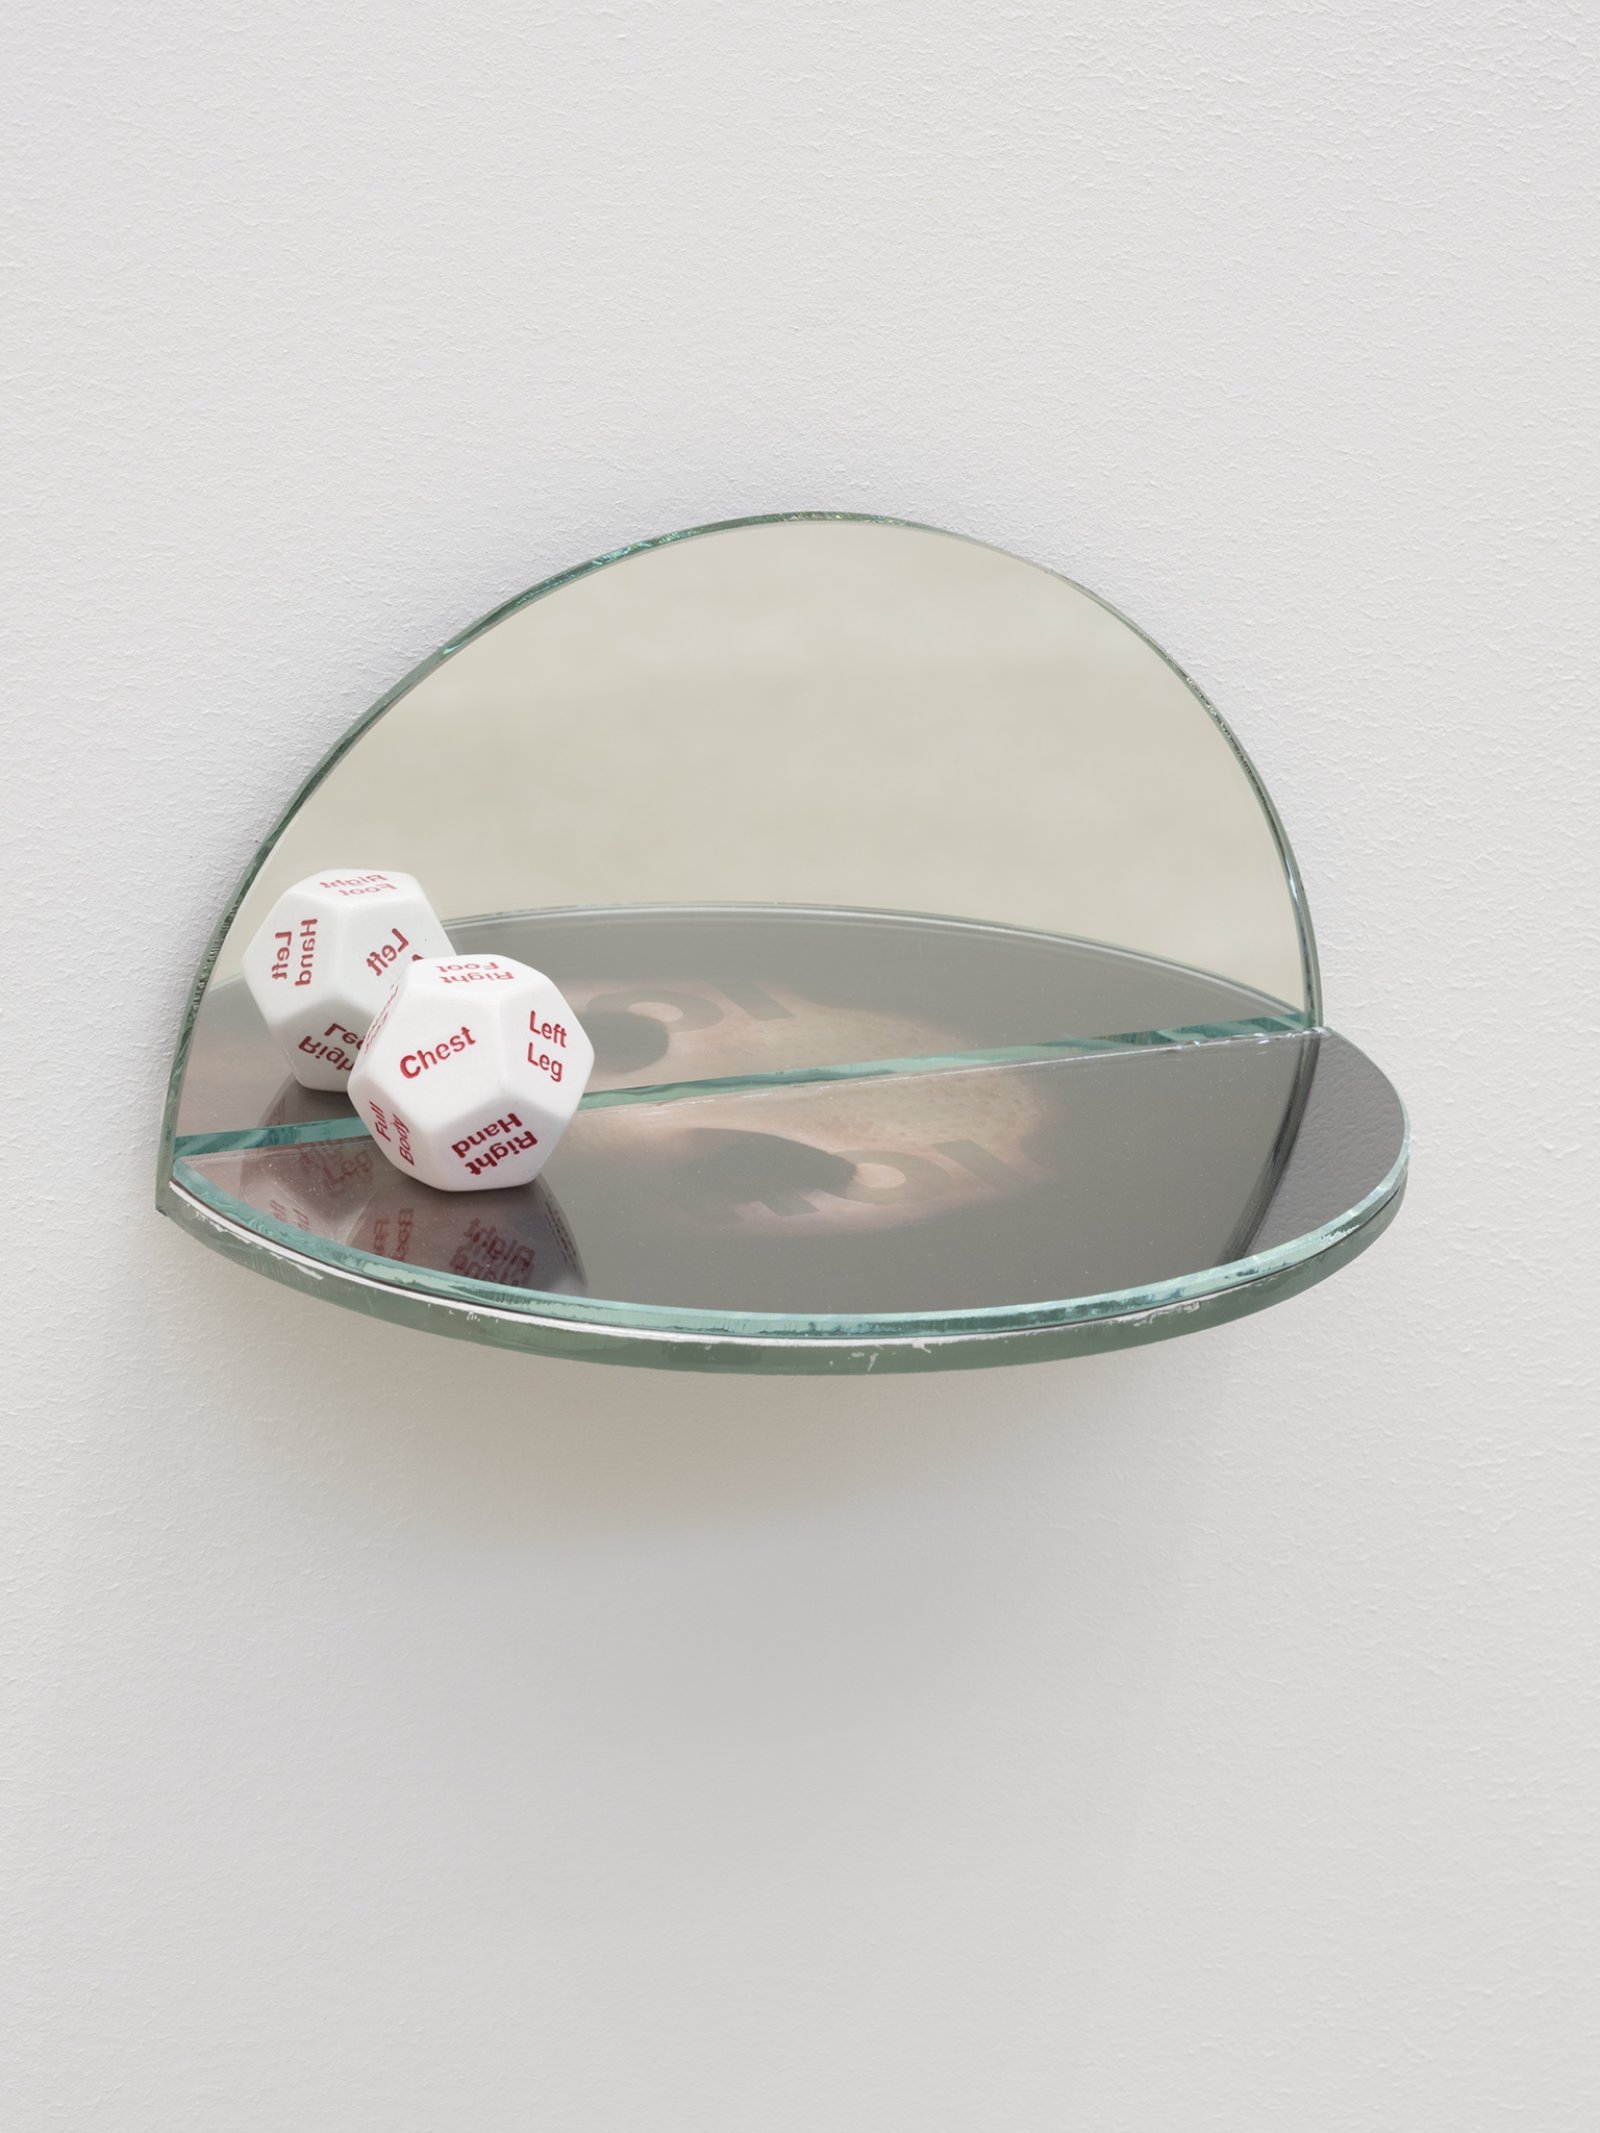 Kasper Feyrer, The Ambidextrous Universe: smelling, 2018, mirror, liquid mirror, glass, fujiclear transparency, 12-sided die, 4 x 4 x 7 in. (9 x 9 x 18 cm)